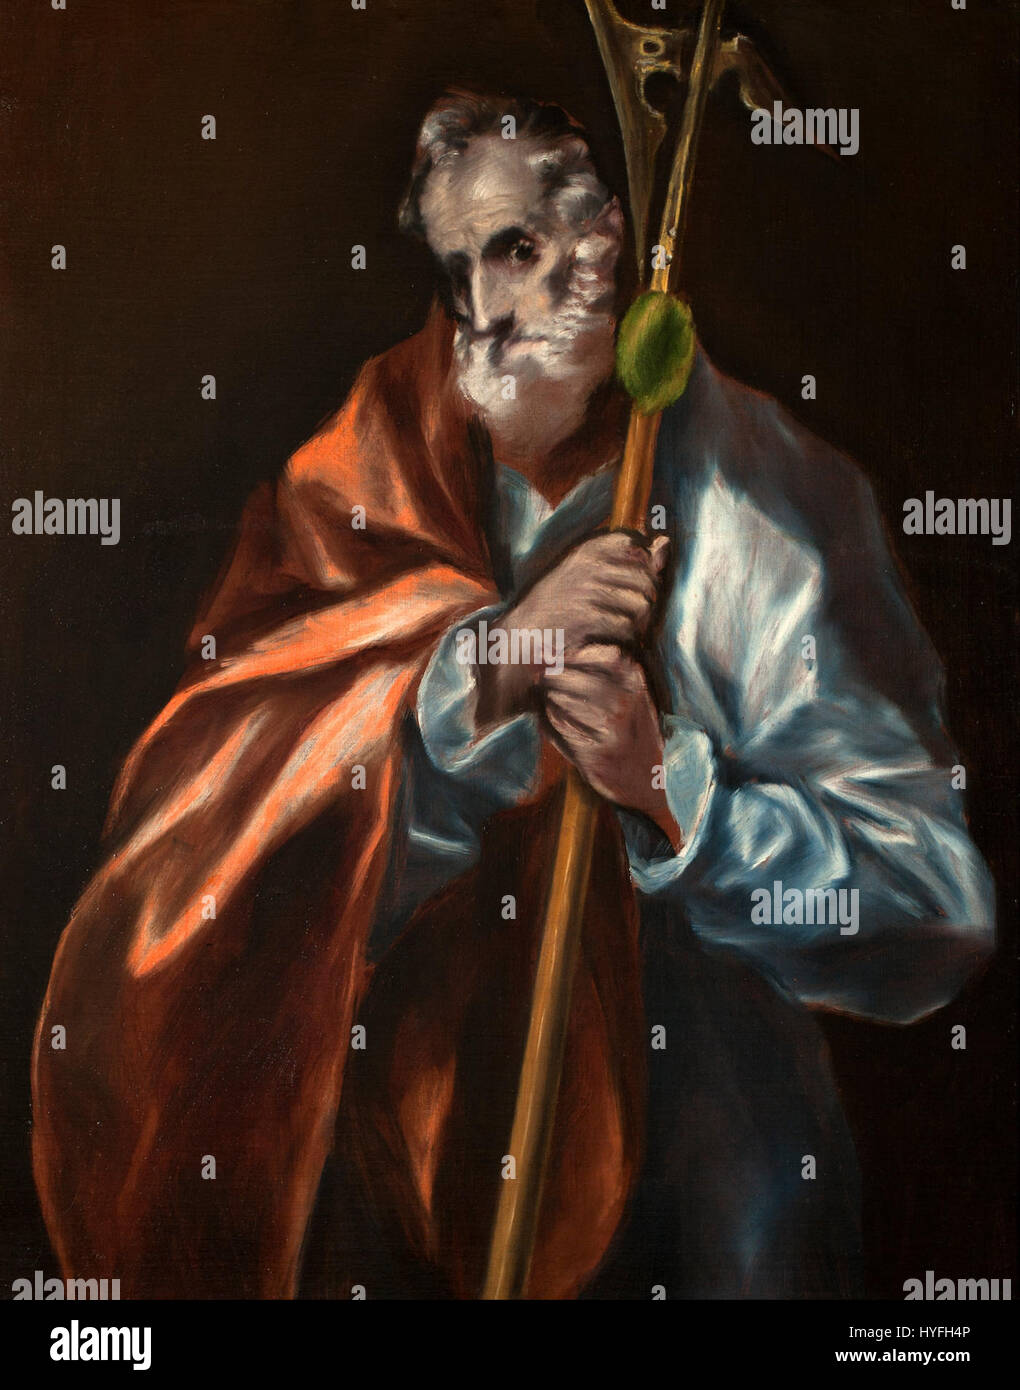 El Greco   St. Jude Thaddeus   Google Art Project Stock Photo